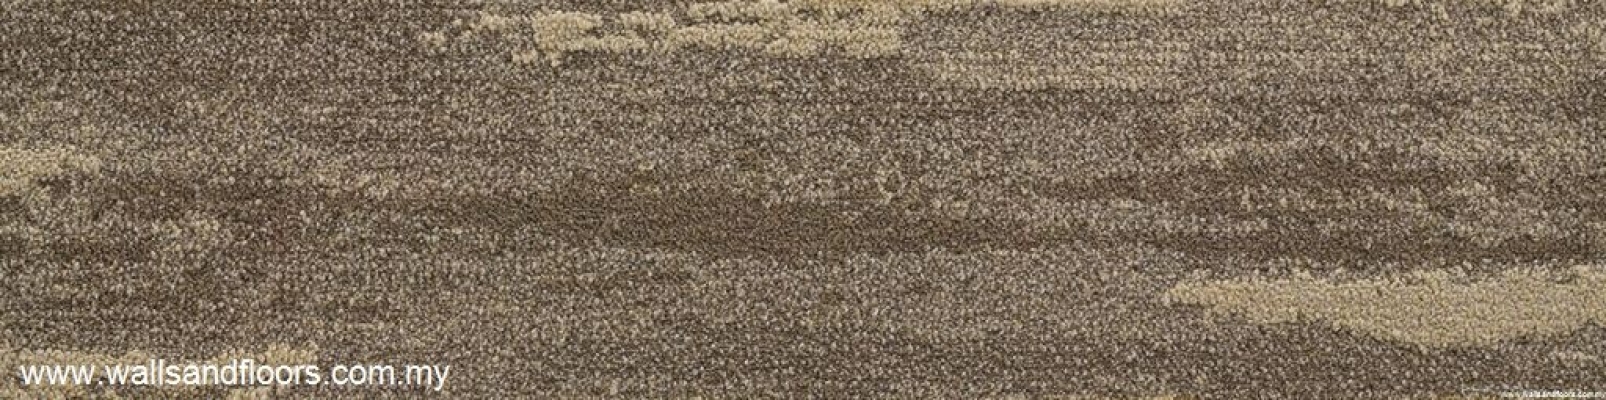 Carpet Model : Season Collection - Season Basic 1-2